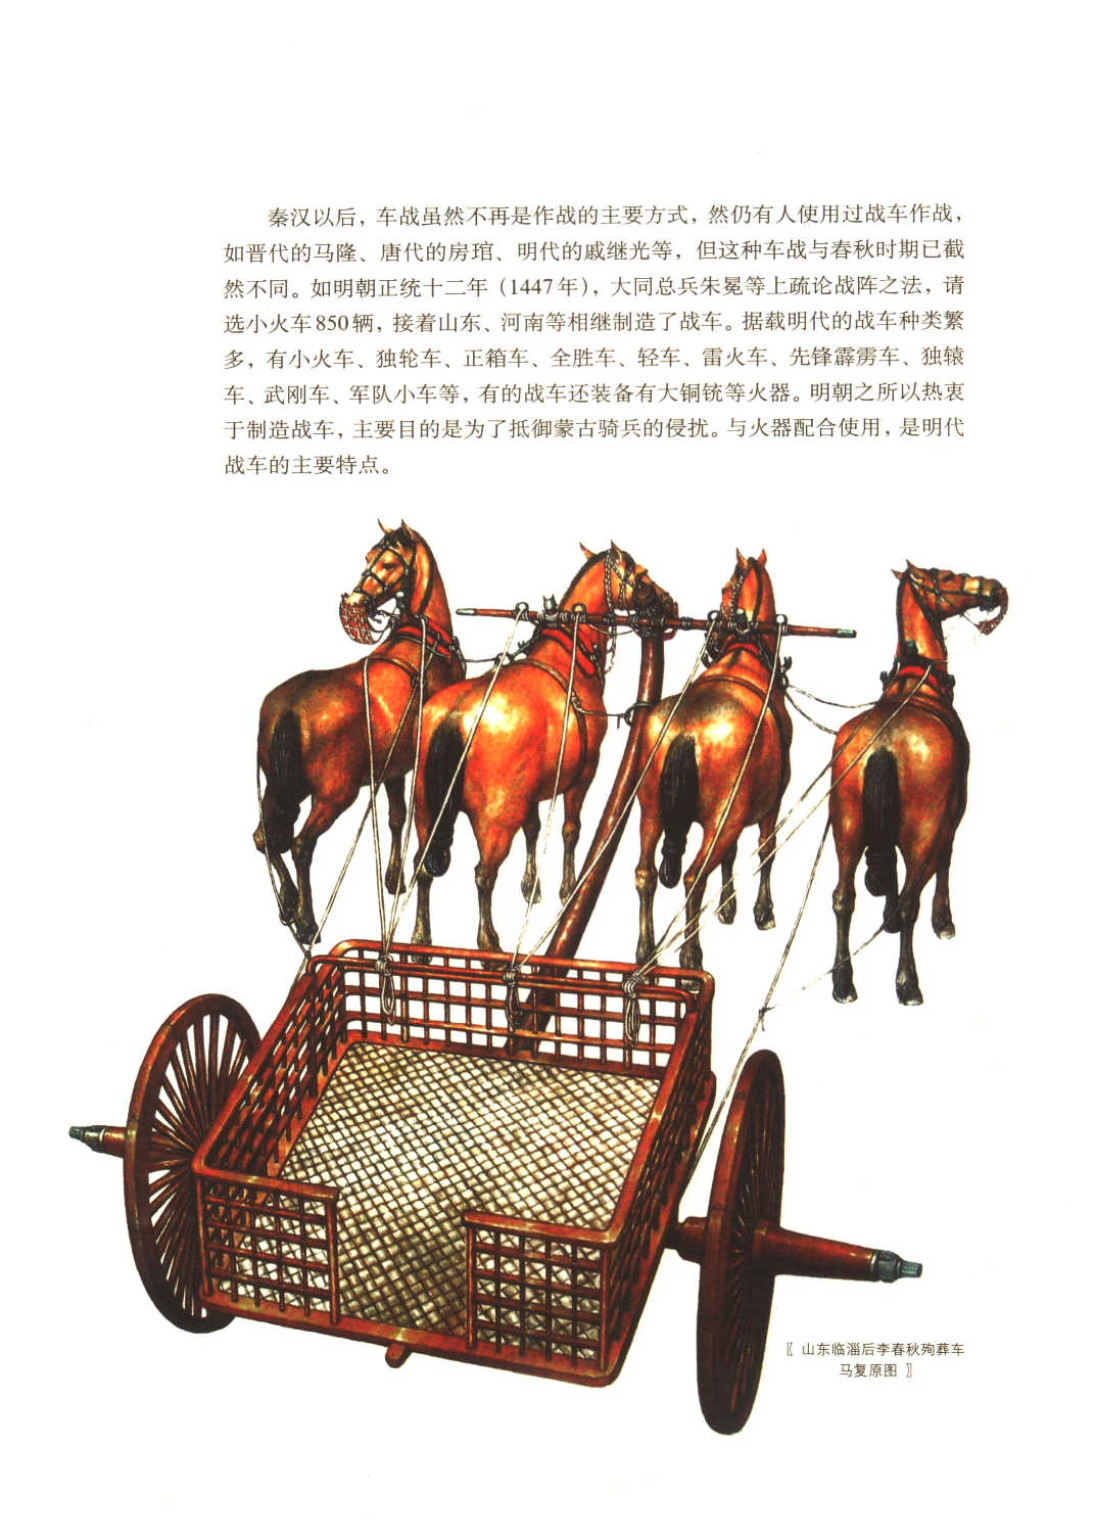 1706470063 224 Chinese Chariots